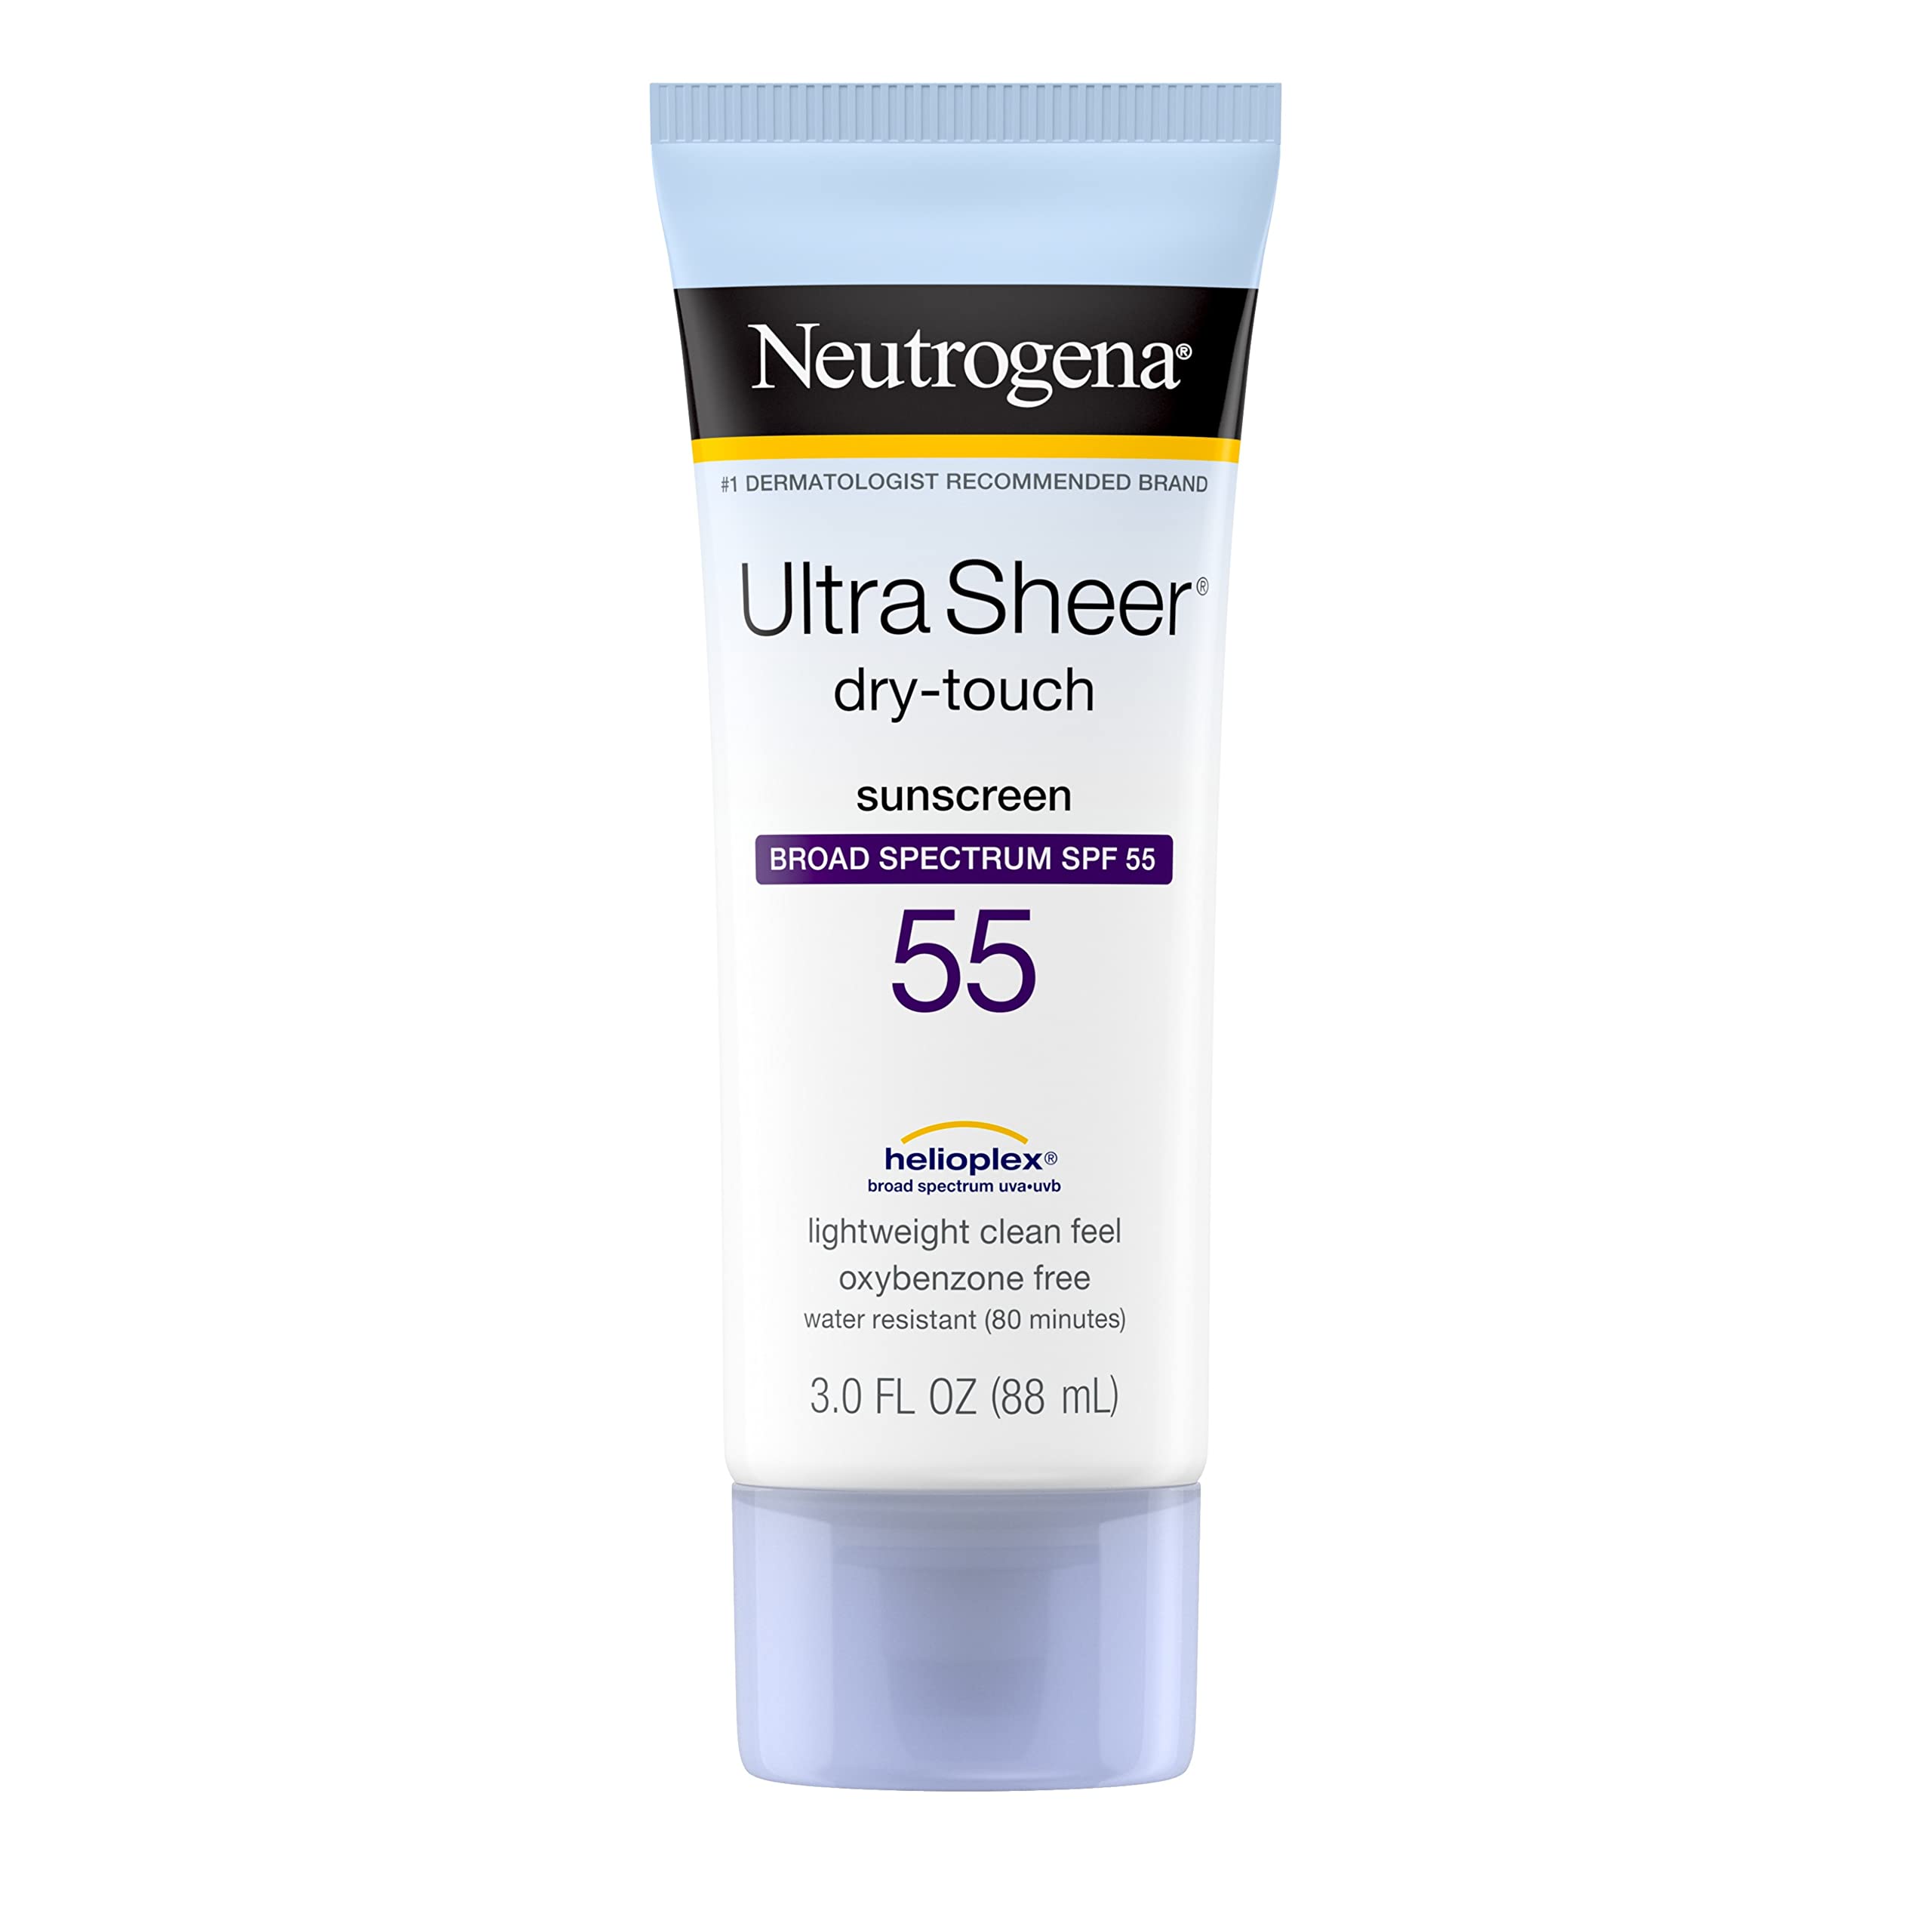 Neutrogena Neutrogena Ultra Sheer Dry-Touch Sunblock Lotion Spf 55, 3 oz